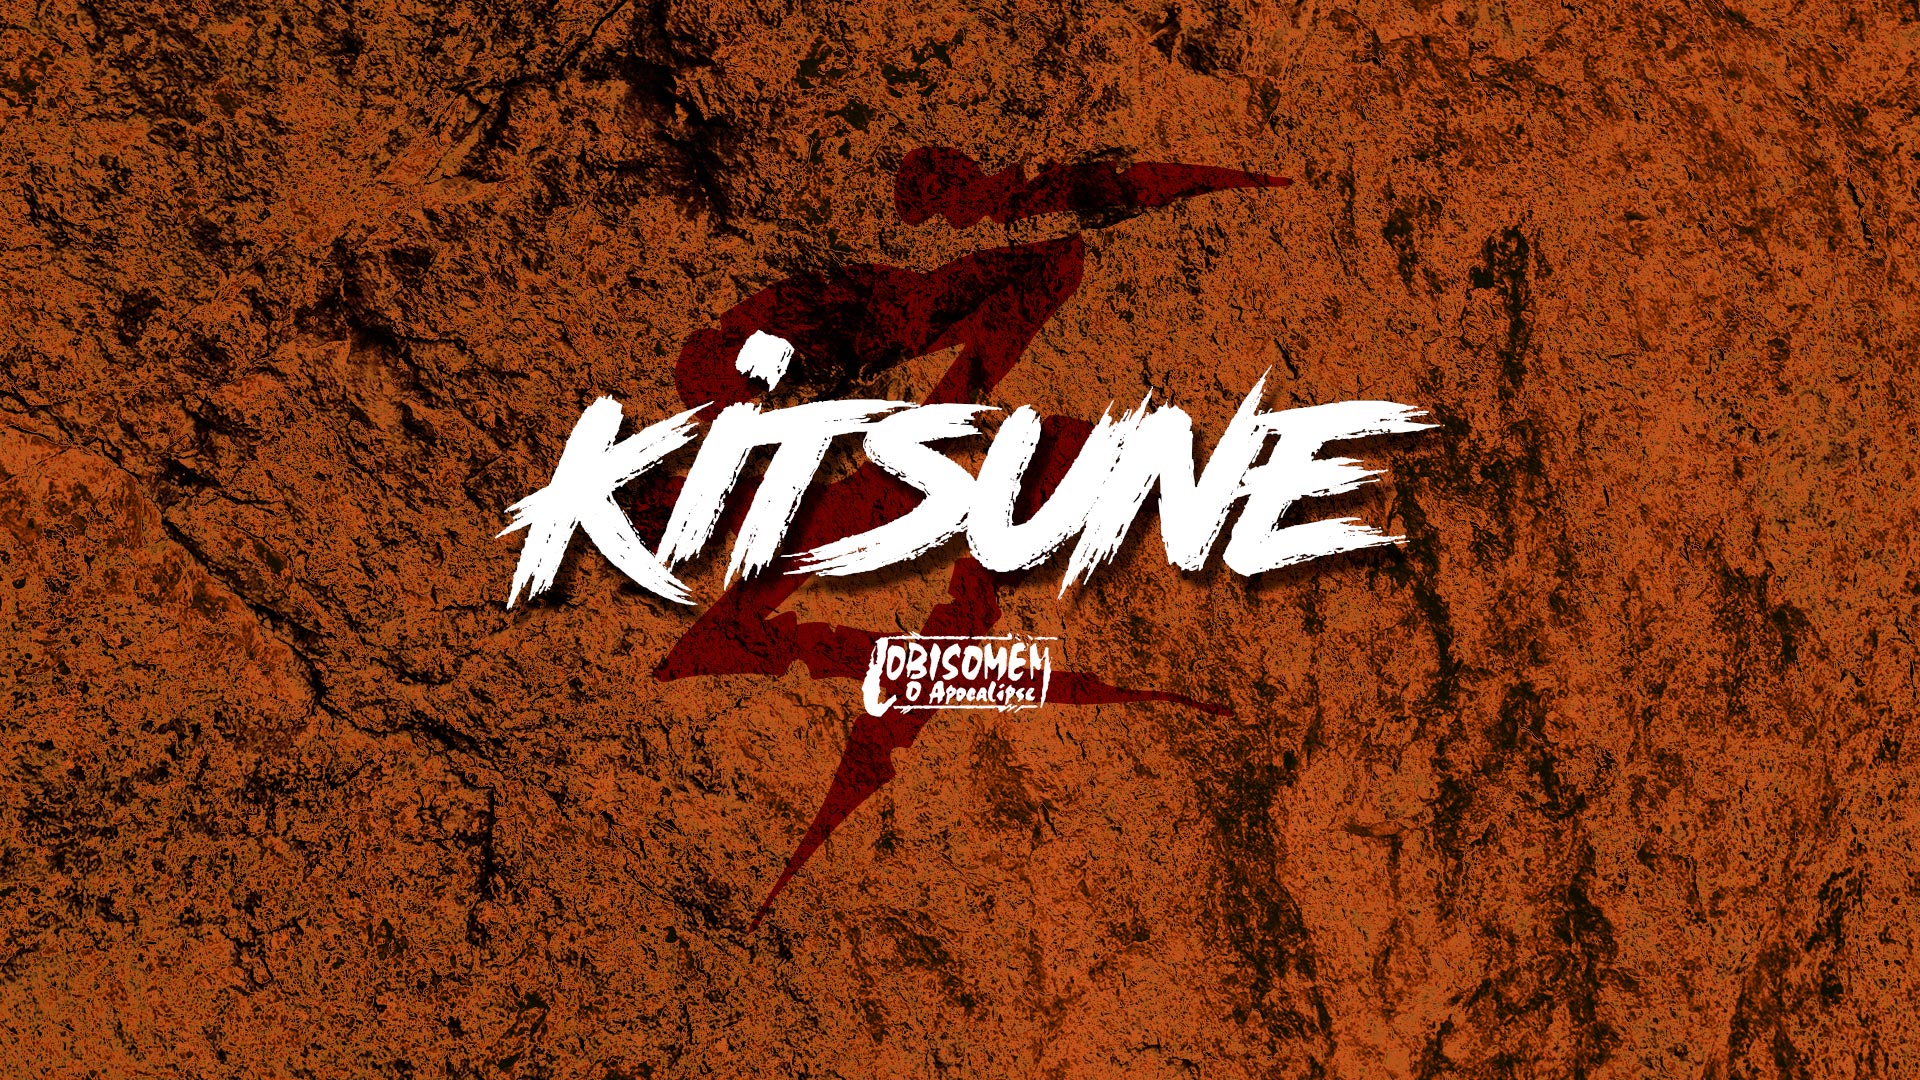 Kitsune – Feras de Lobisomem O Apocalipse